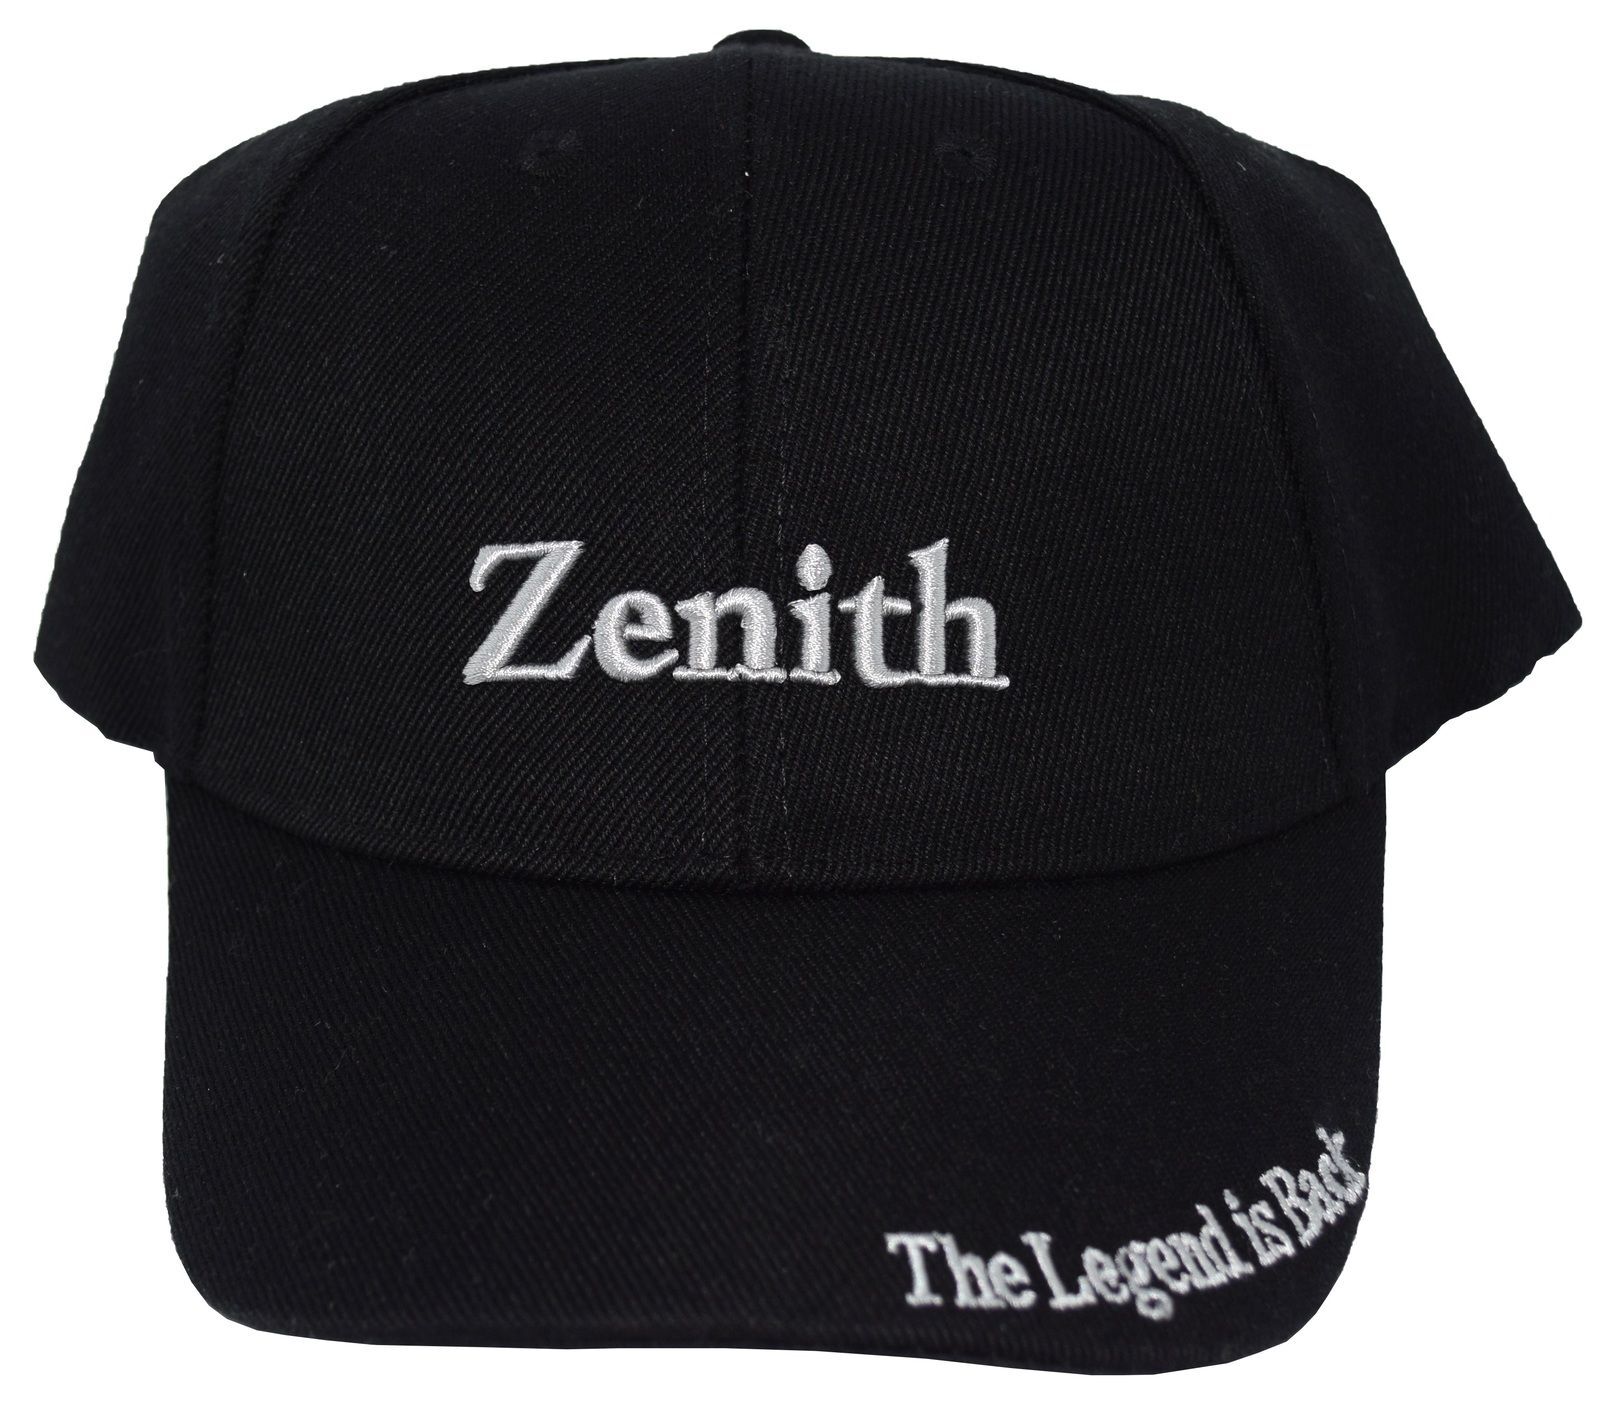 Zenith Stitched Caps